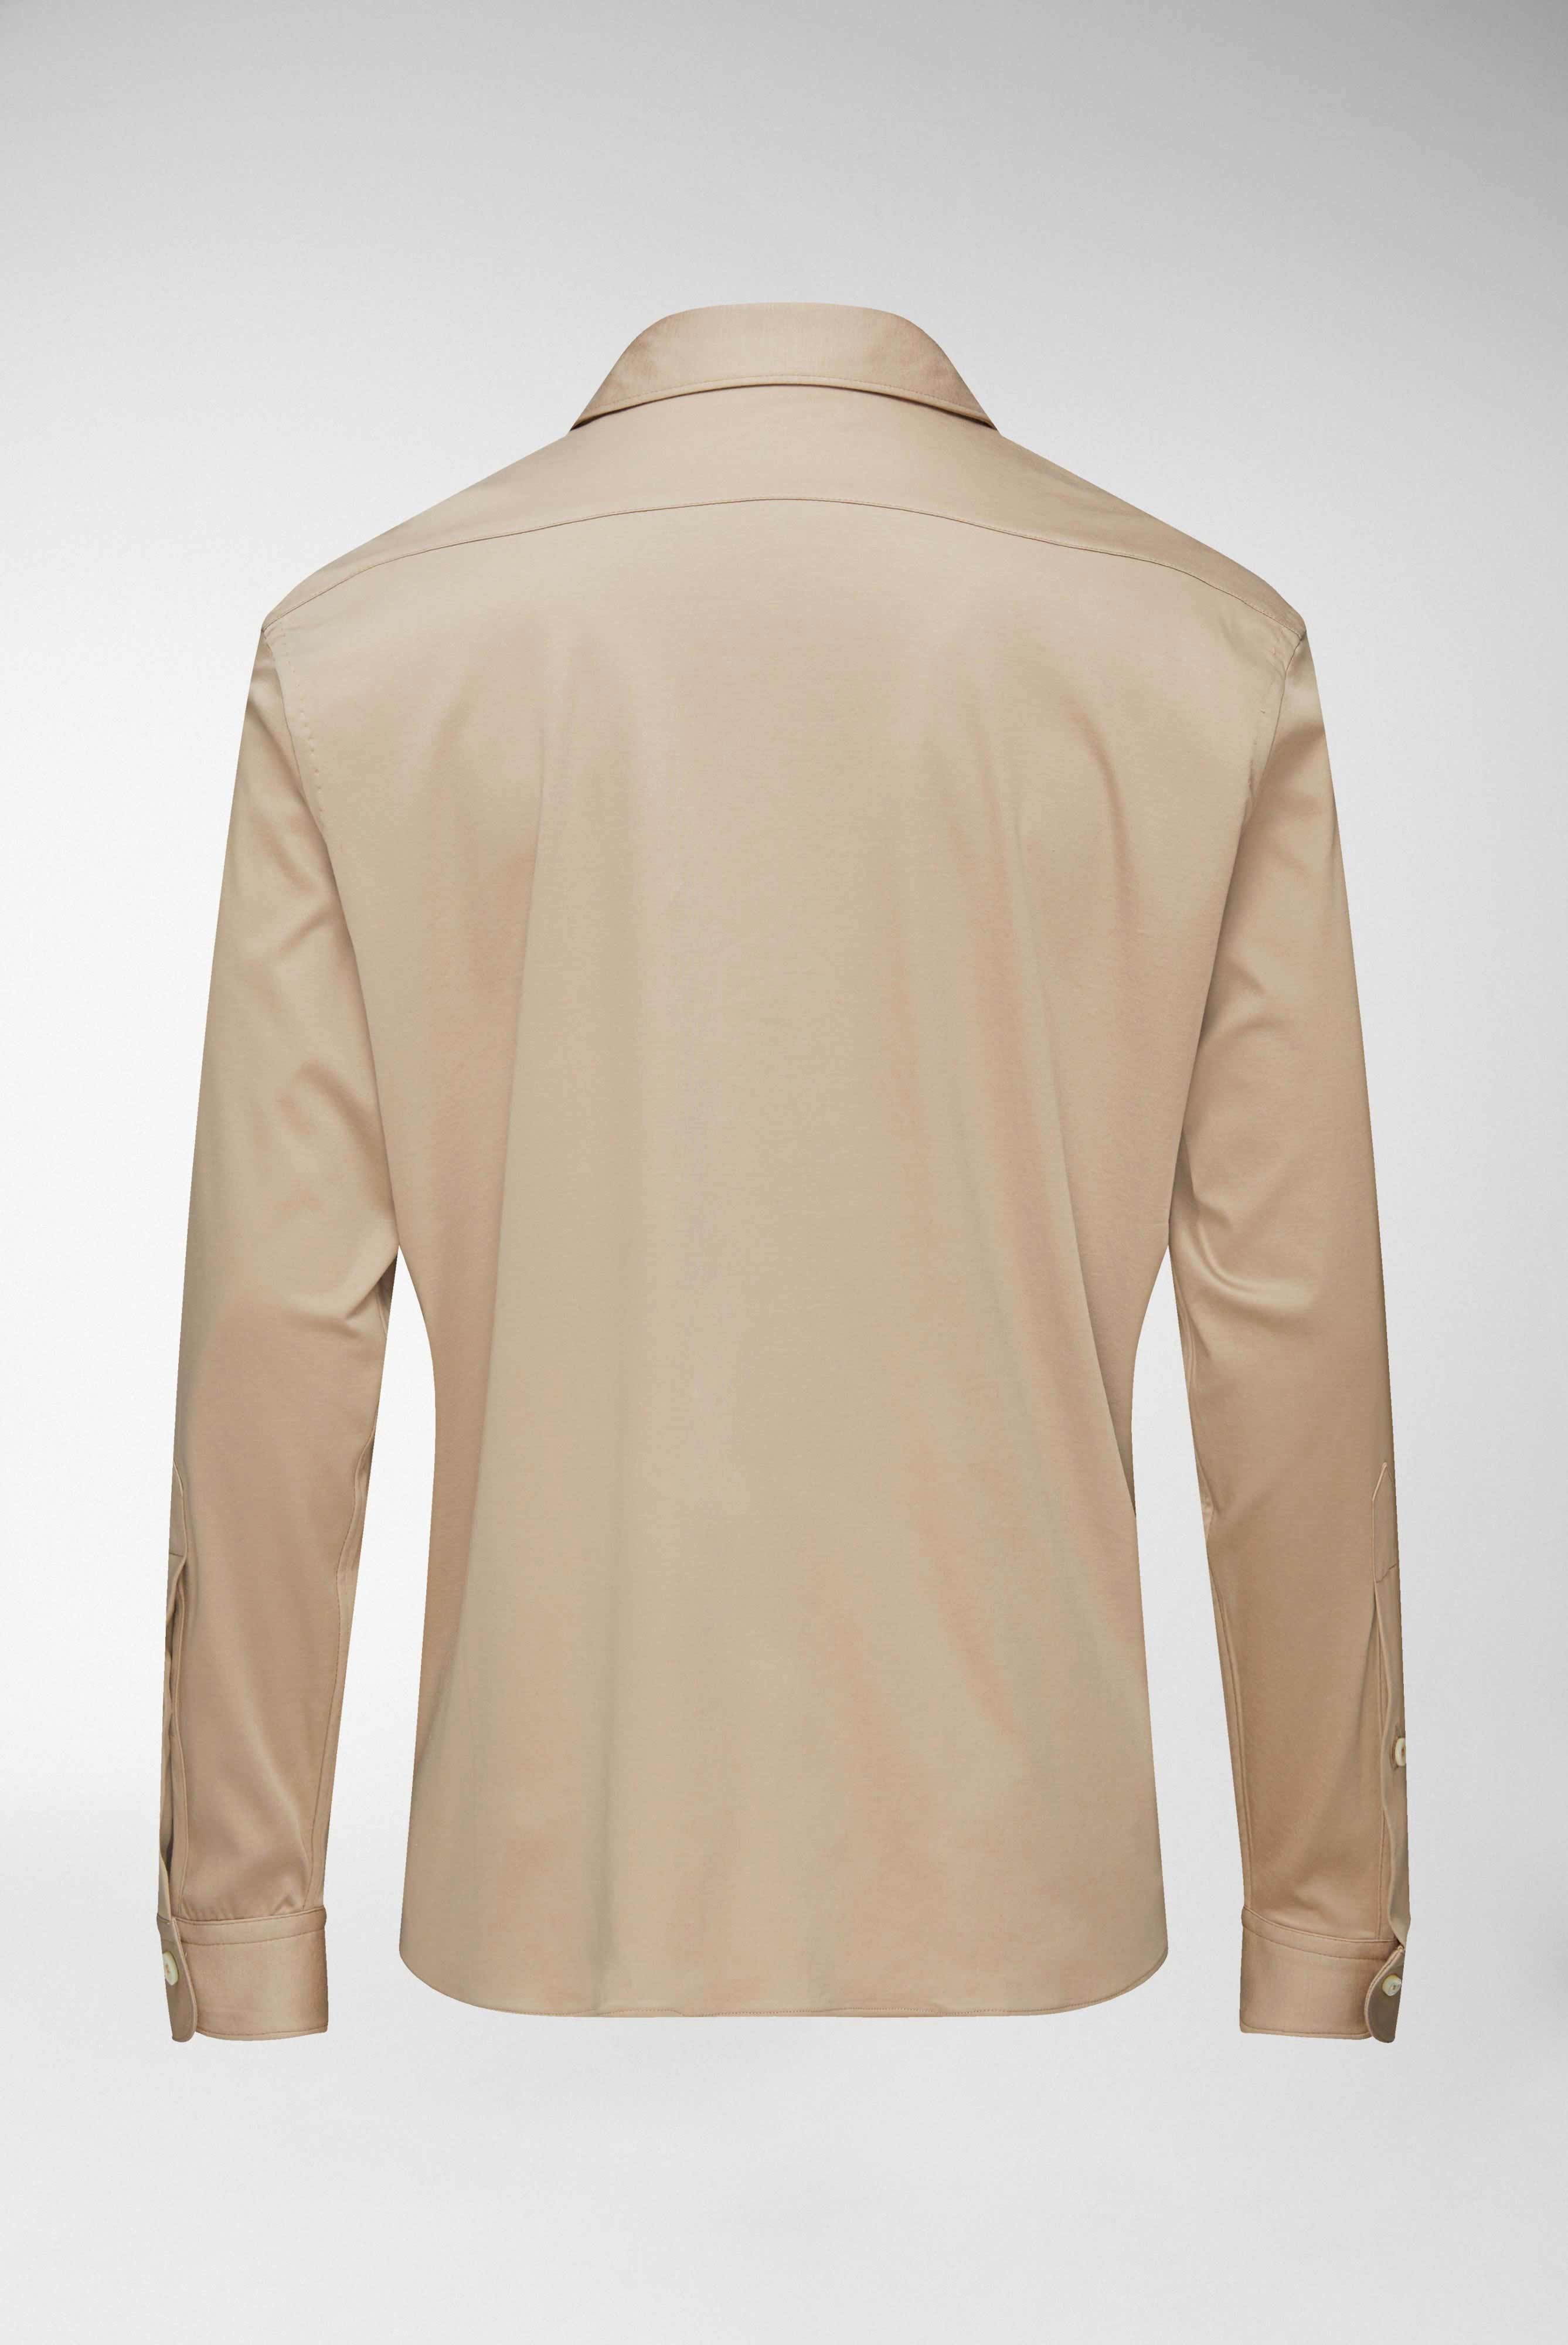 Casual Hemden+Jersey Hemd aus Schweizer Baumwolle Tailor Fit+20.1683.UC.180031.140.XXL